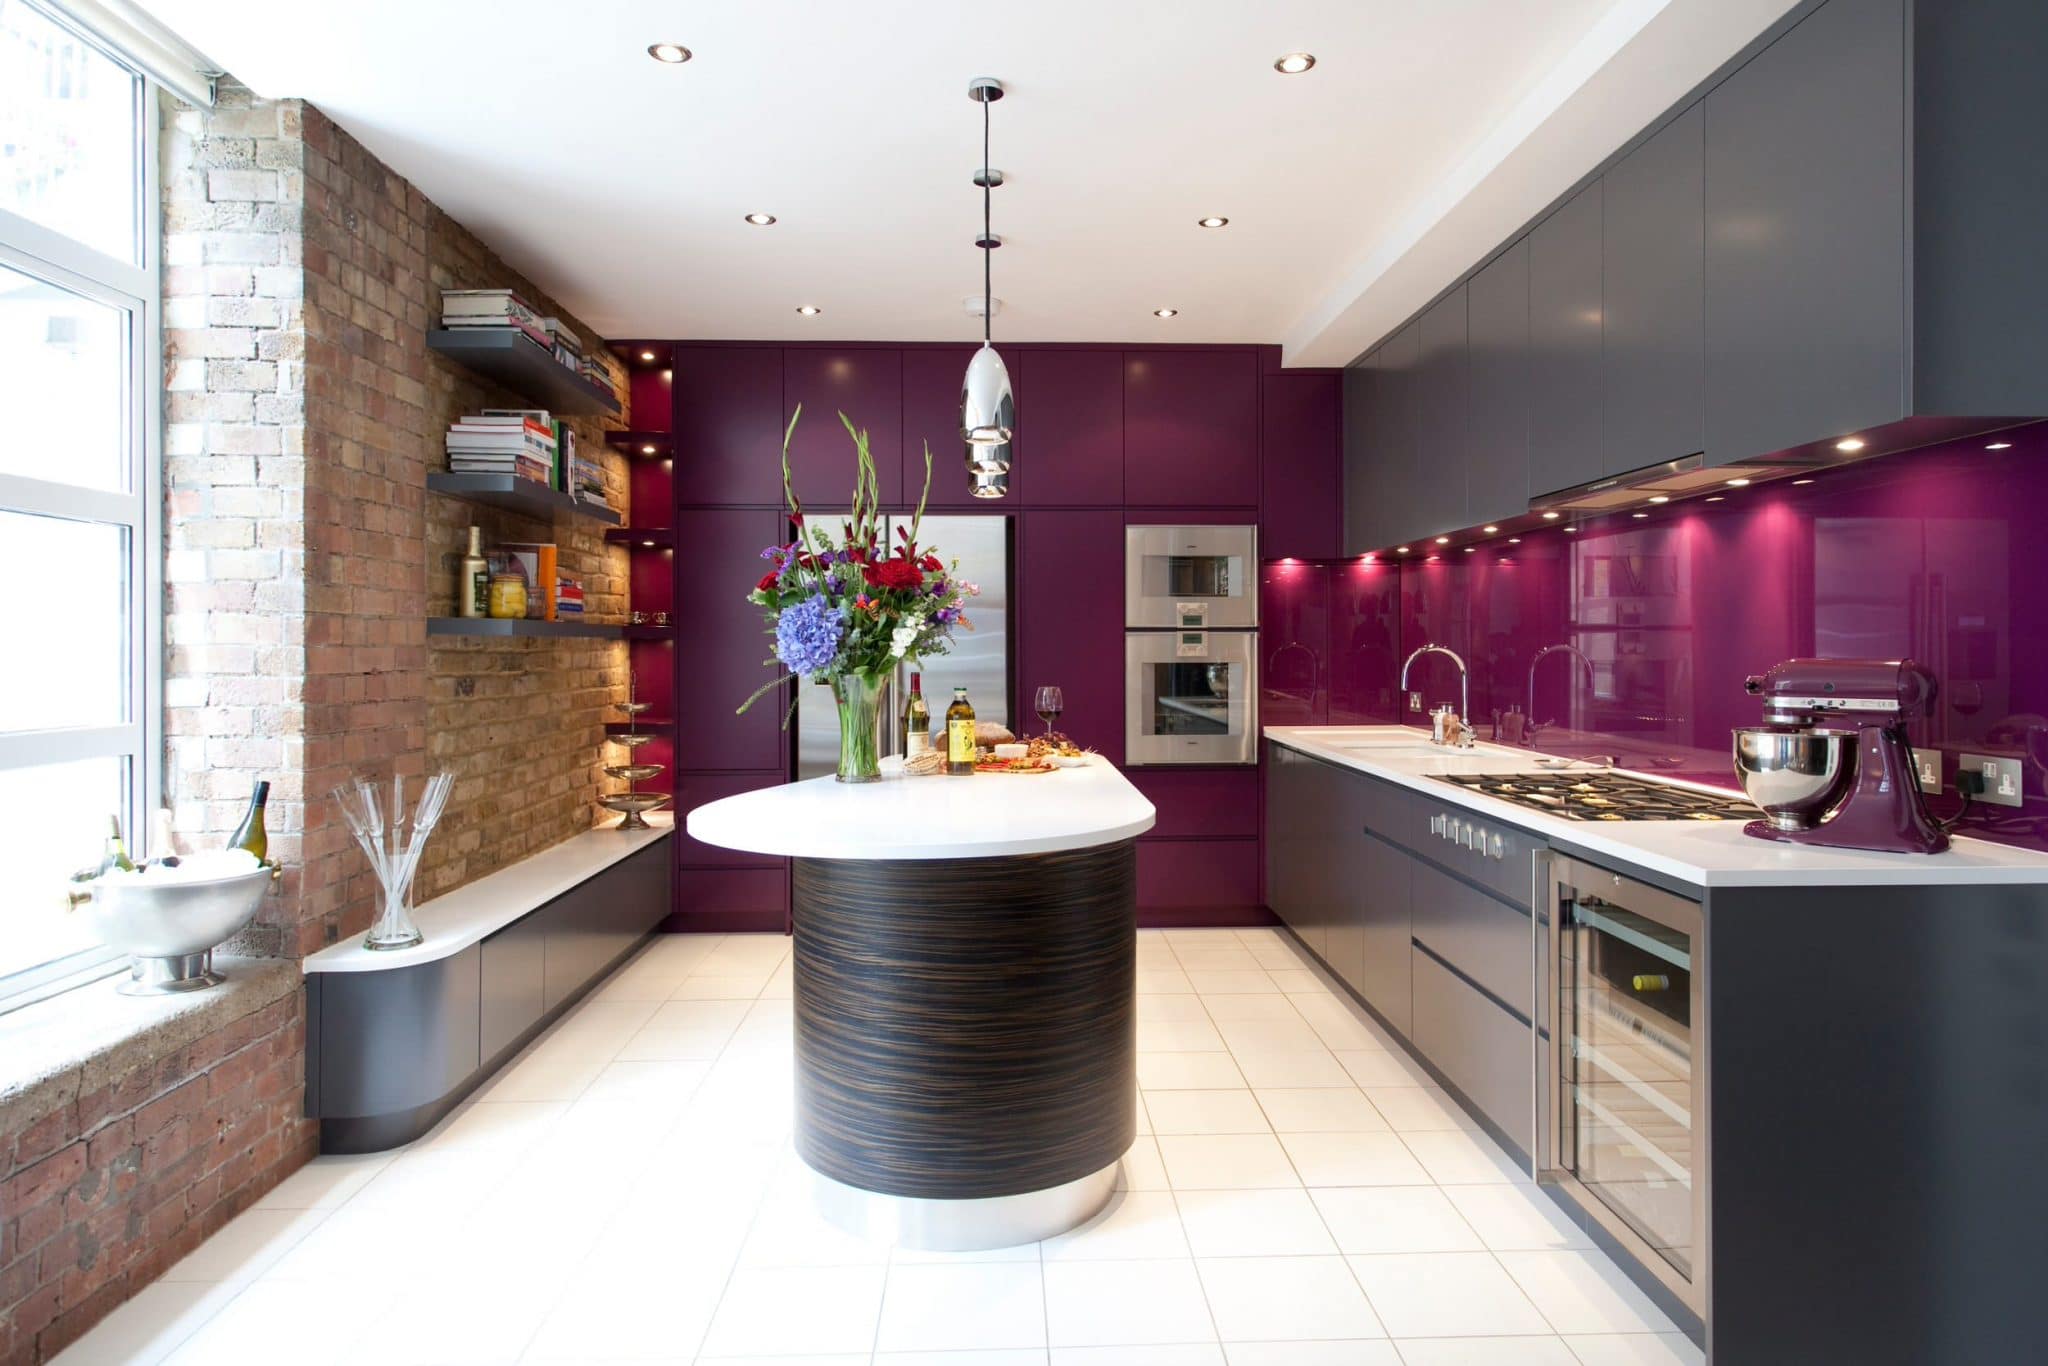 https://www.bestonlinecabinets.com/blog/wp-content/uploads/2017/10/purple-kitchen.jpg